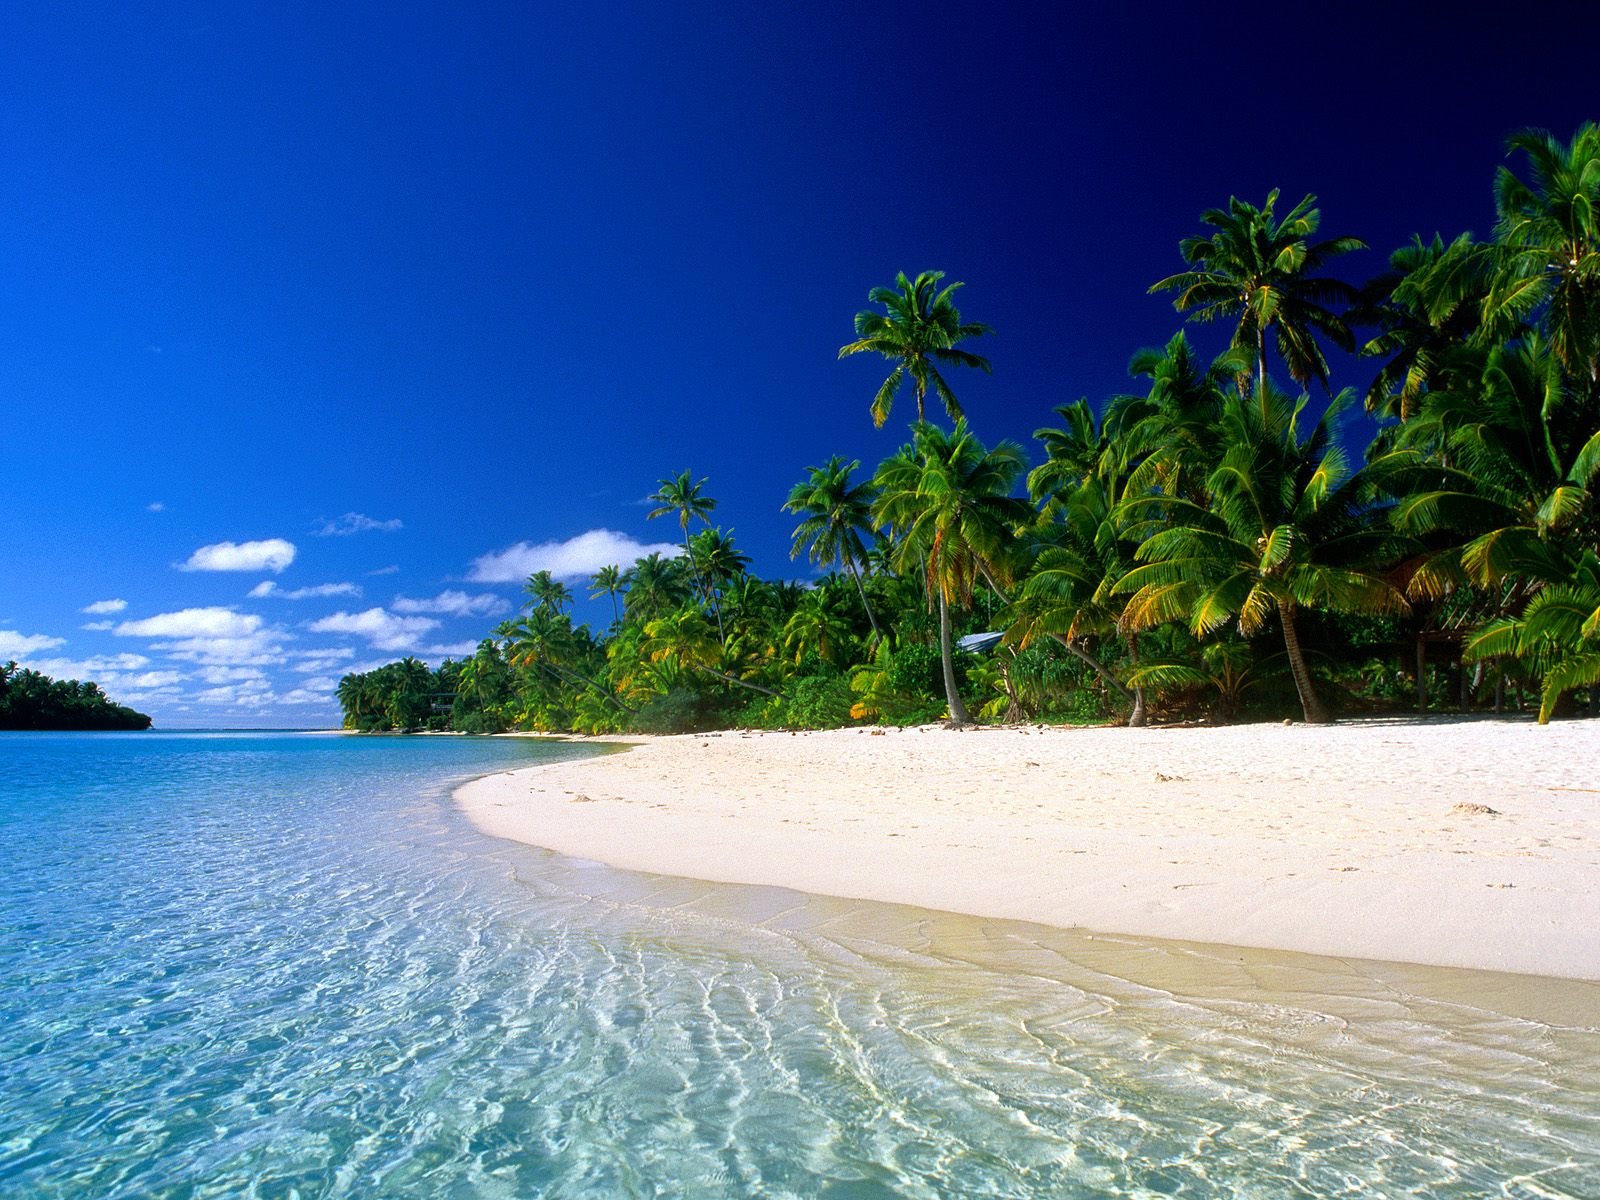 Agregar más de 75 fondos playas paradisiacas - kidsdream.edu.vn